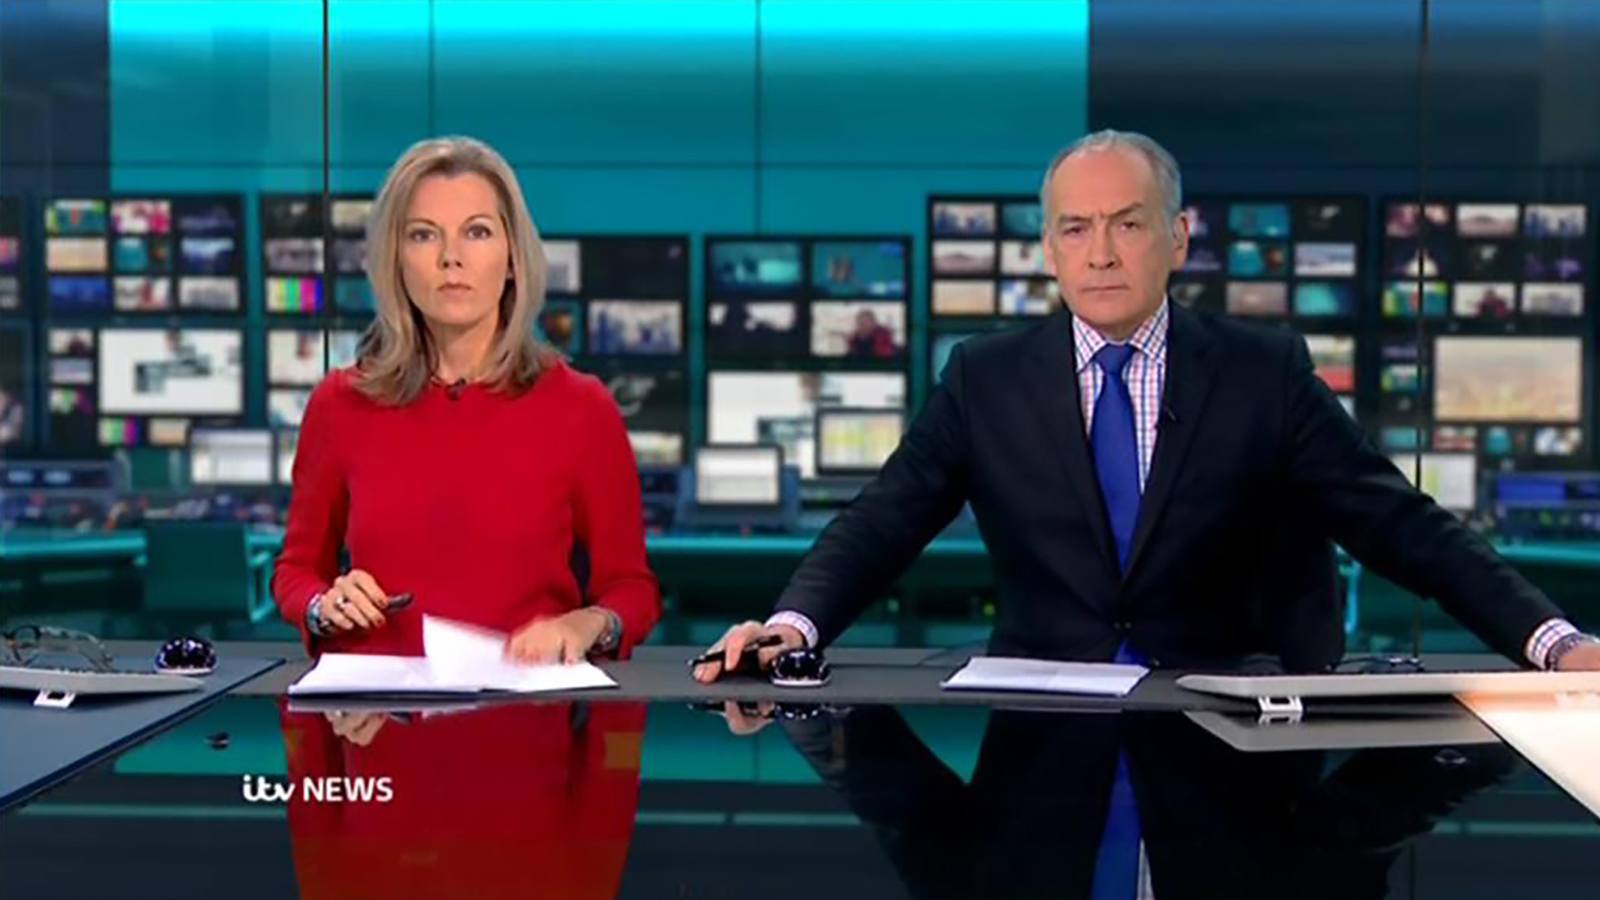 ITV News virtual set design